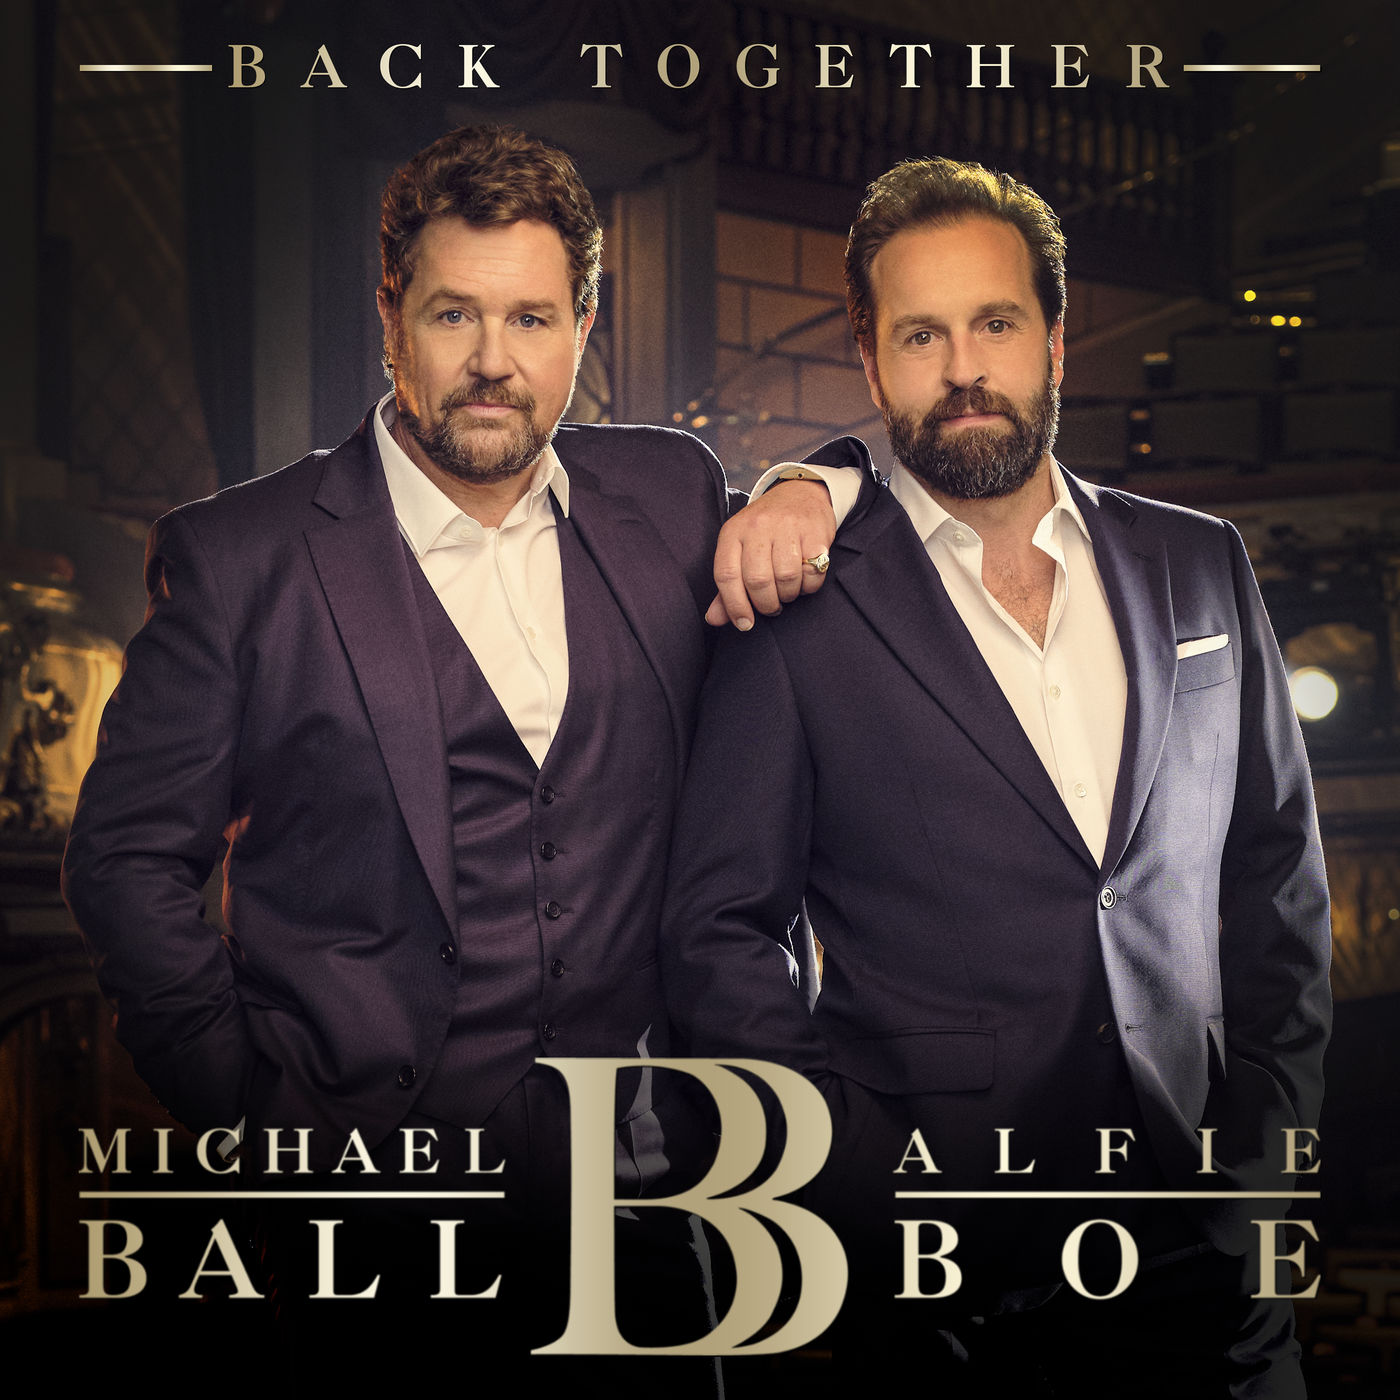 Michael Ball & Alfie Boe - Back Together (2019) [FLAC 24bit/96kHz]